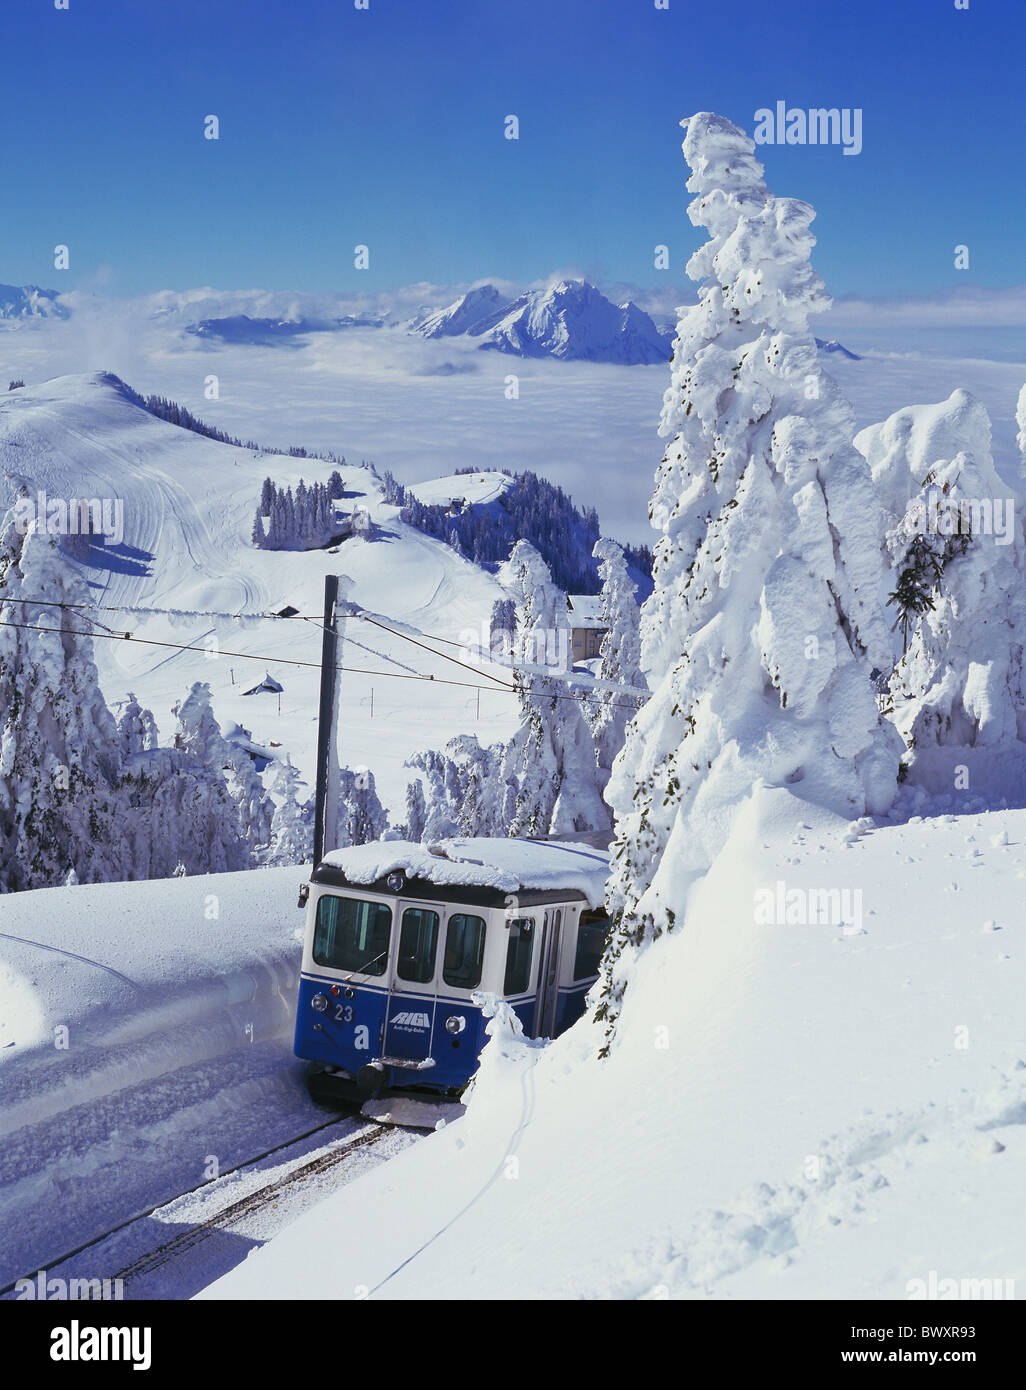 railway mountain road remote Lucerne Pilatus Rigi Switzerland Europe skiing area winter cloud cover Stock Photo